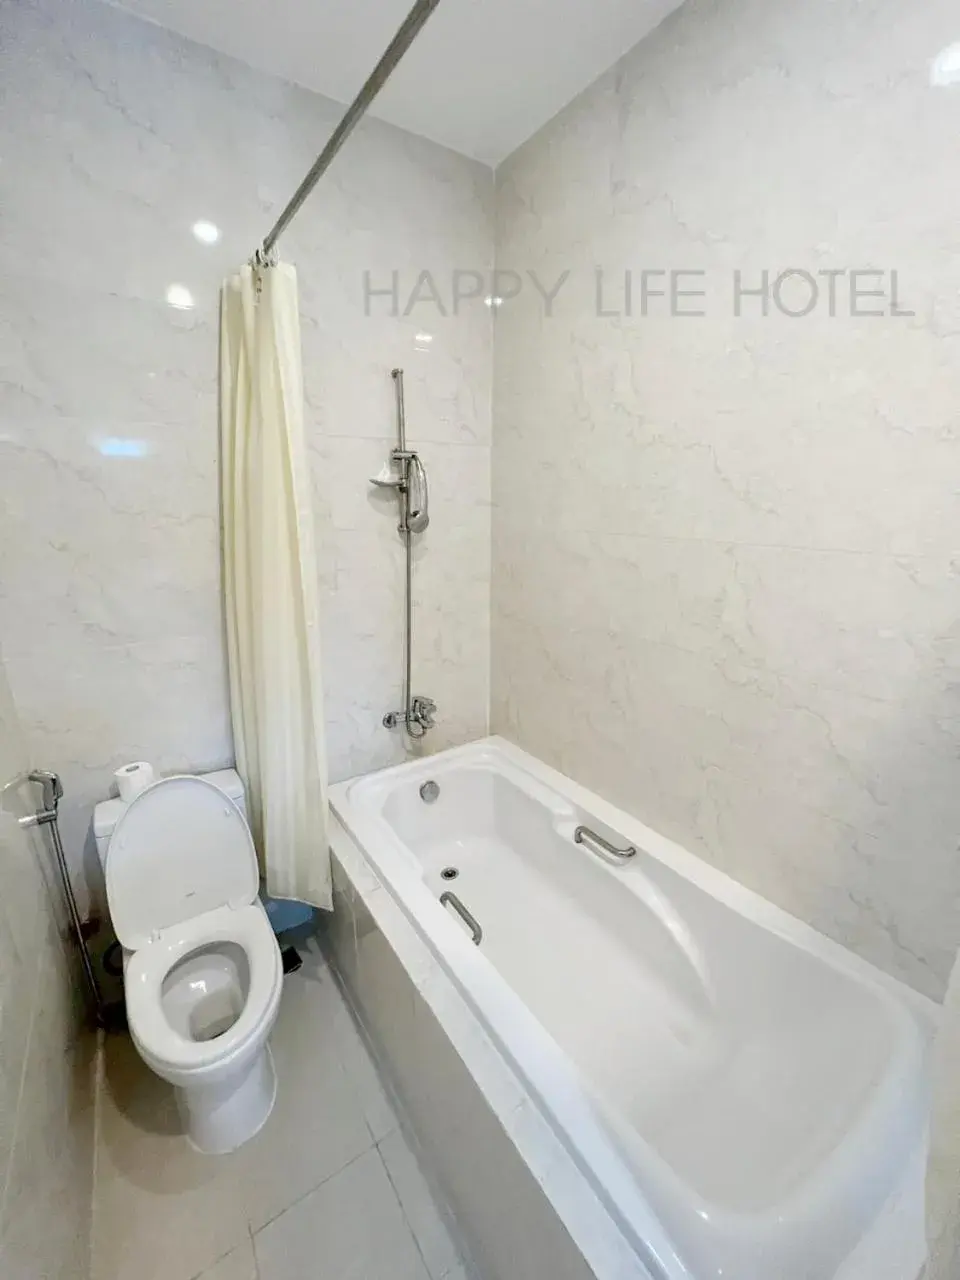 Bathroom in Happy Life Hotel